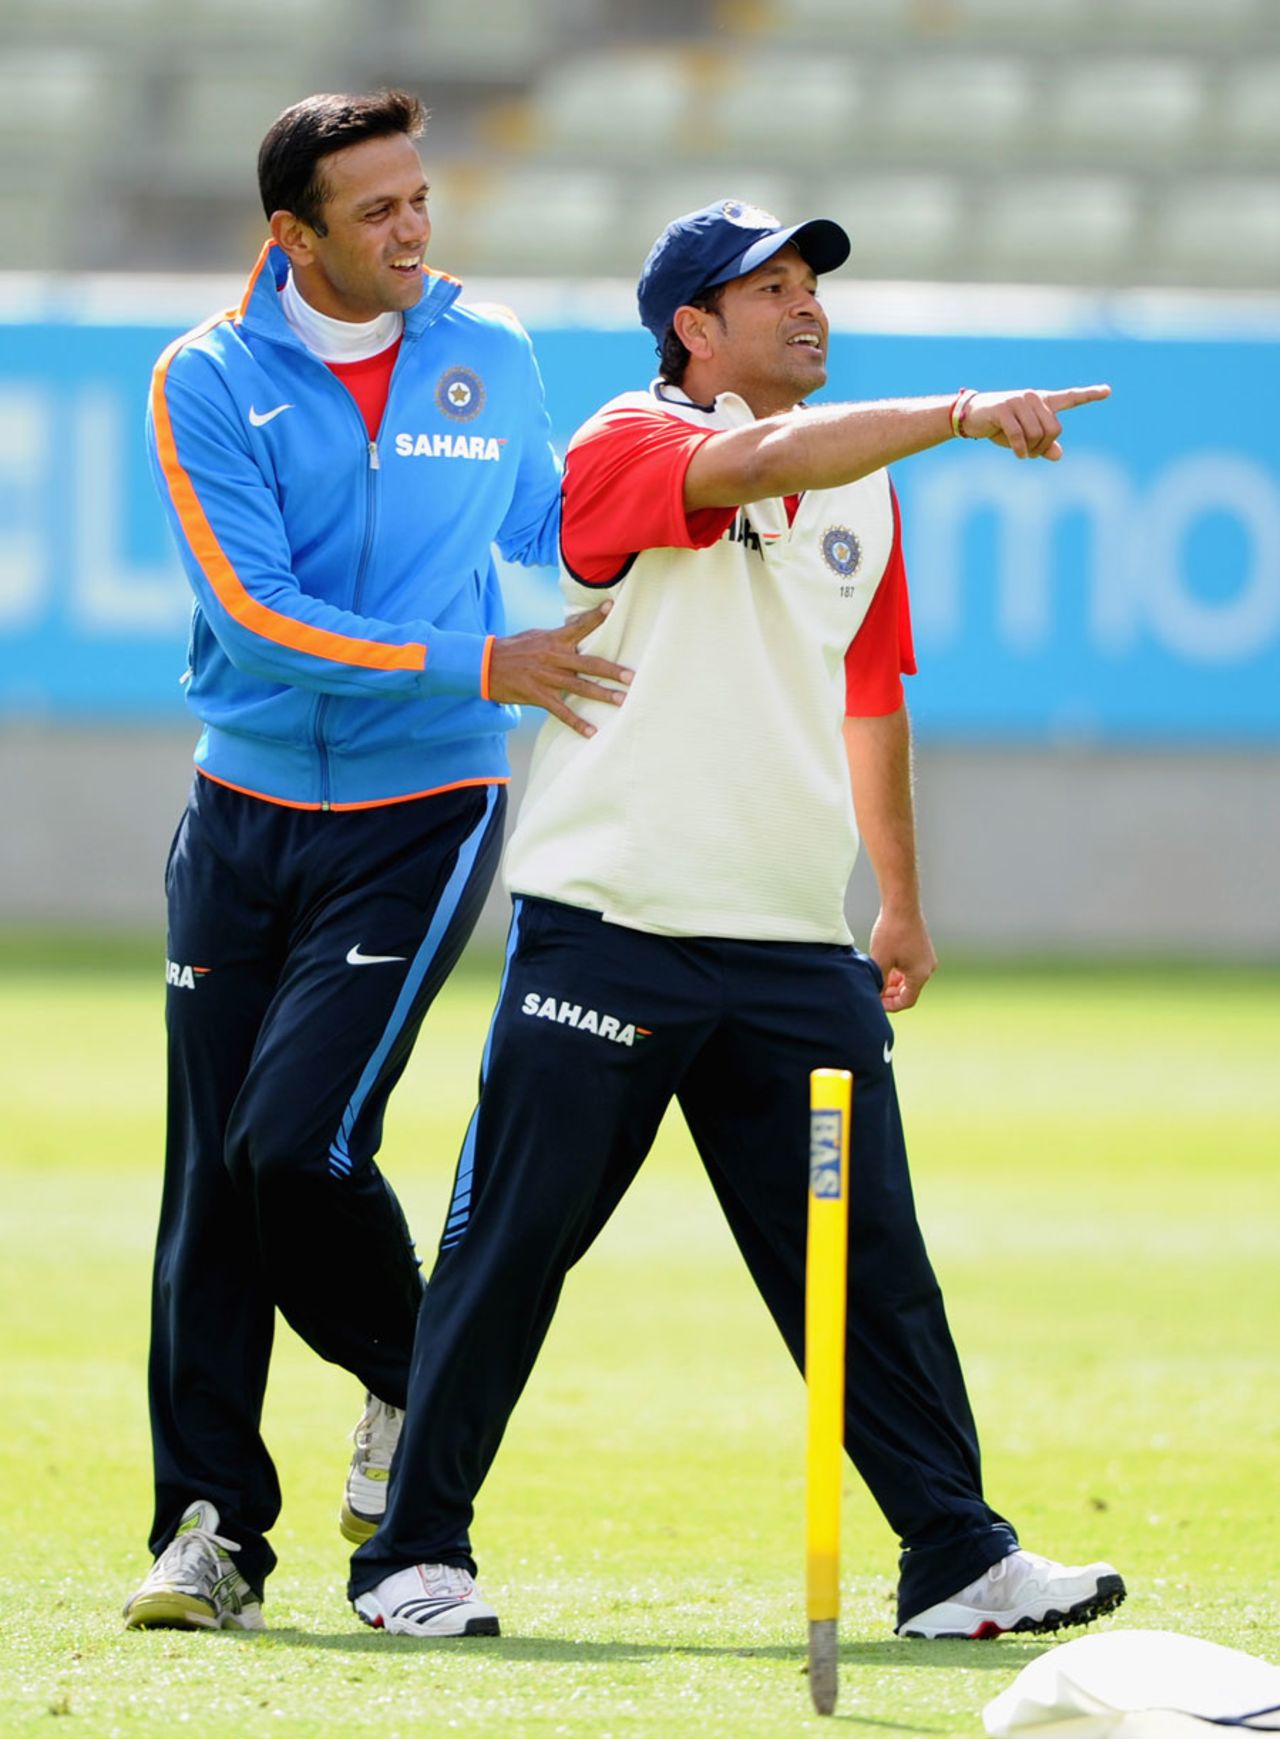 Rahul Dravid and Sachin Tendulkar share a light moment during practice, Birmingham, August 8, 2011